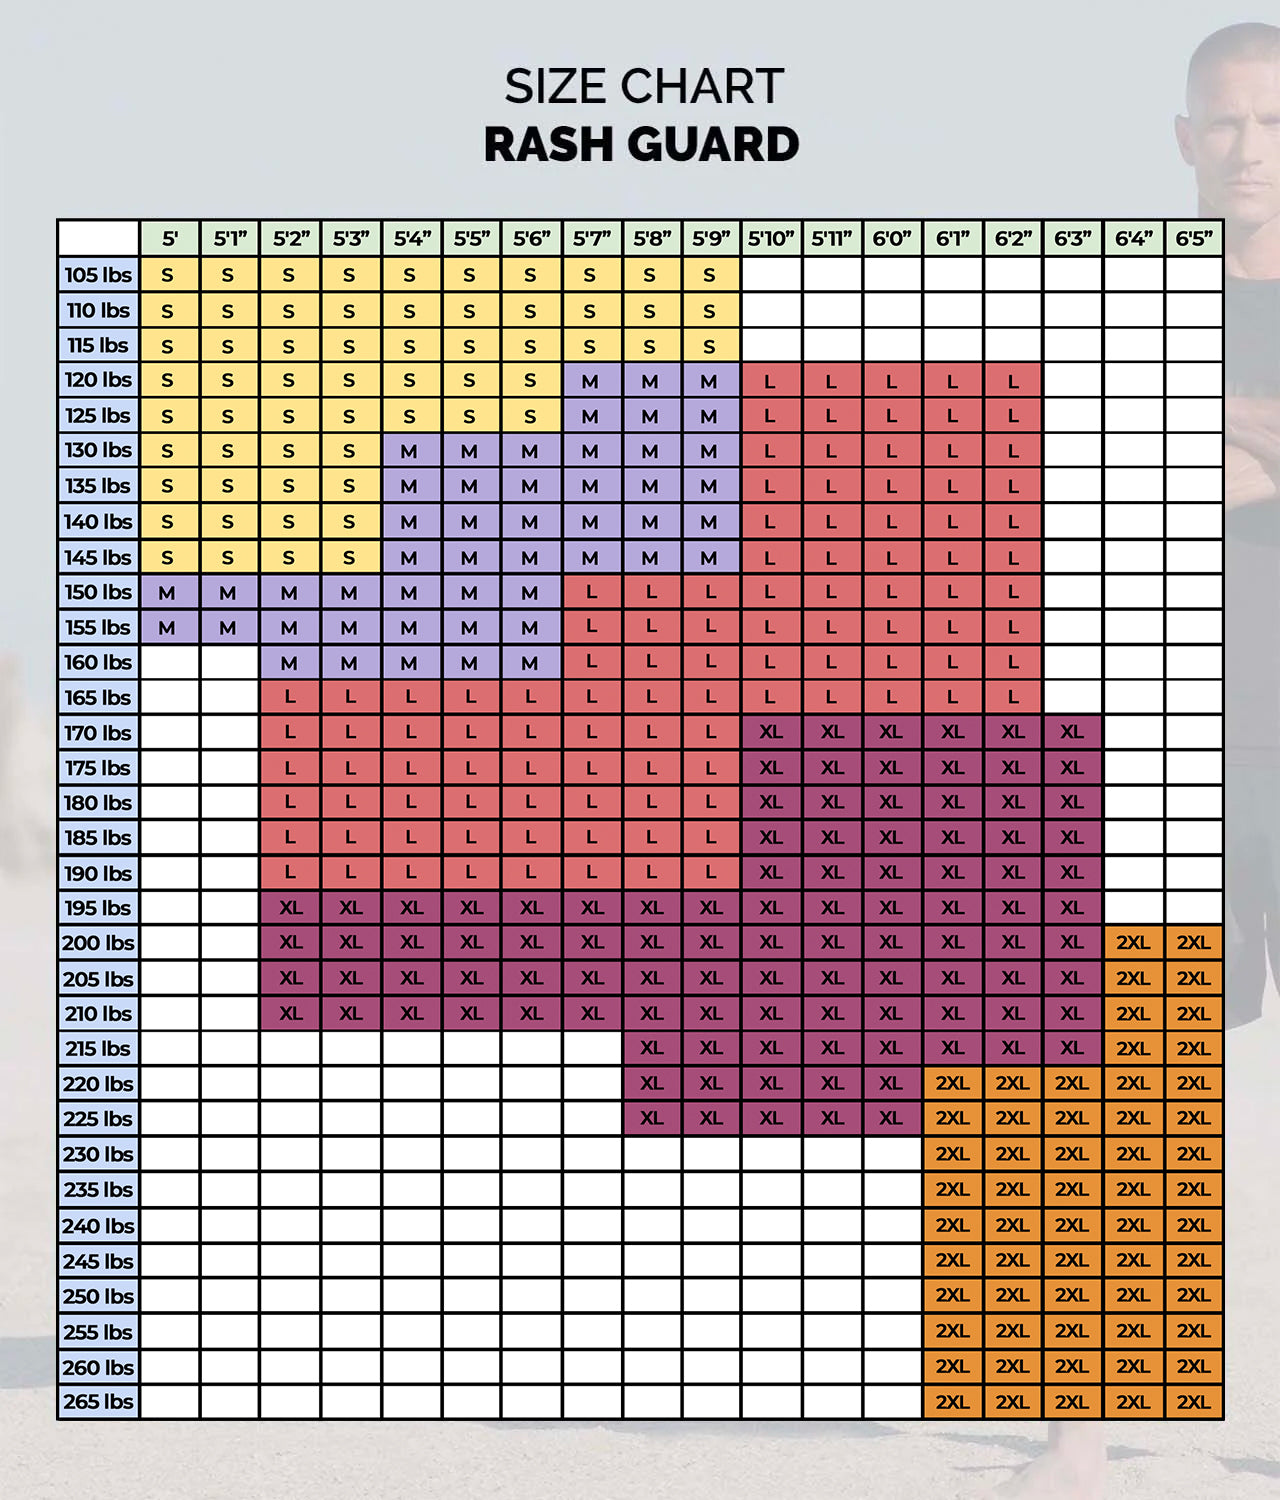 Elite Sports Men's Standard White Short Sleeve MMA Rash Guard Size Guide